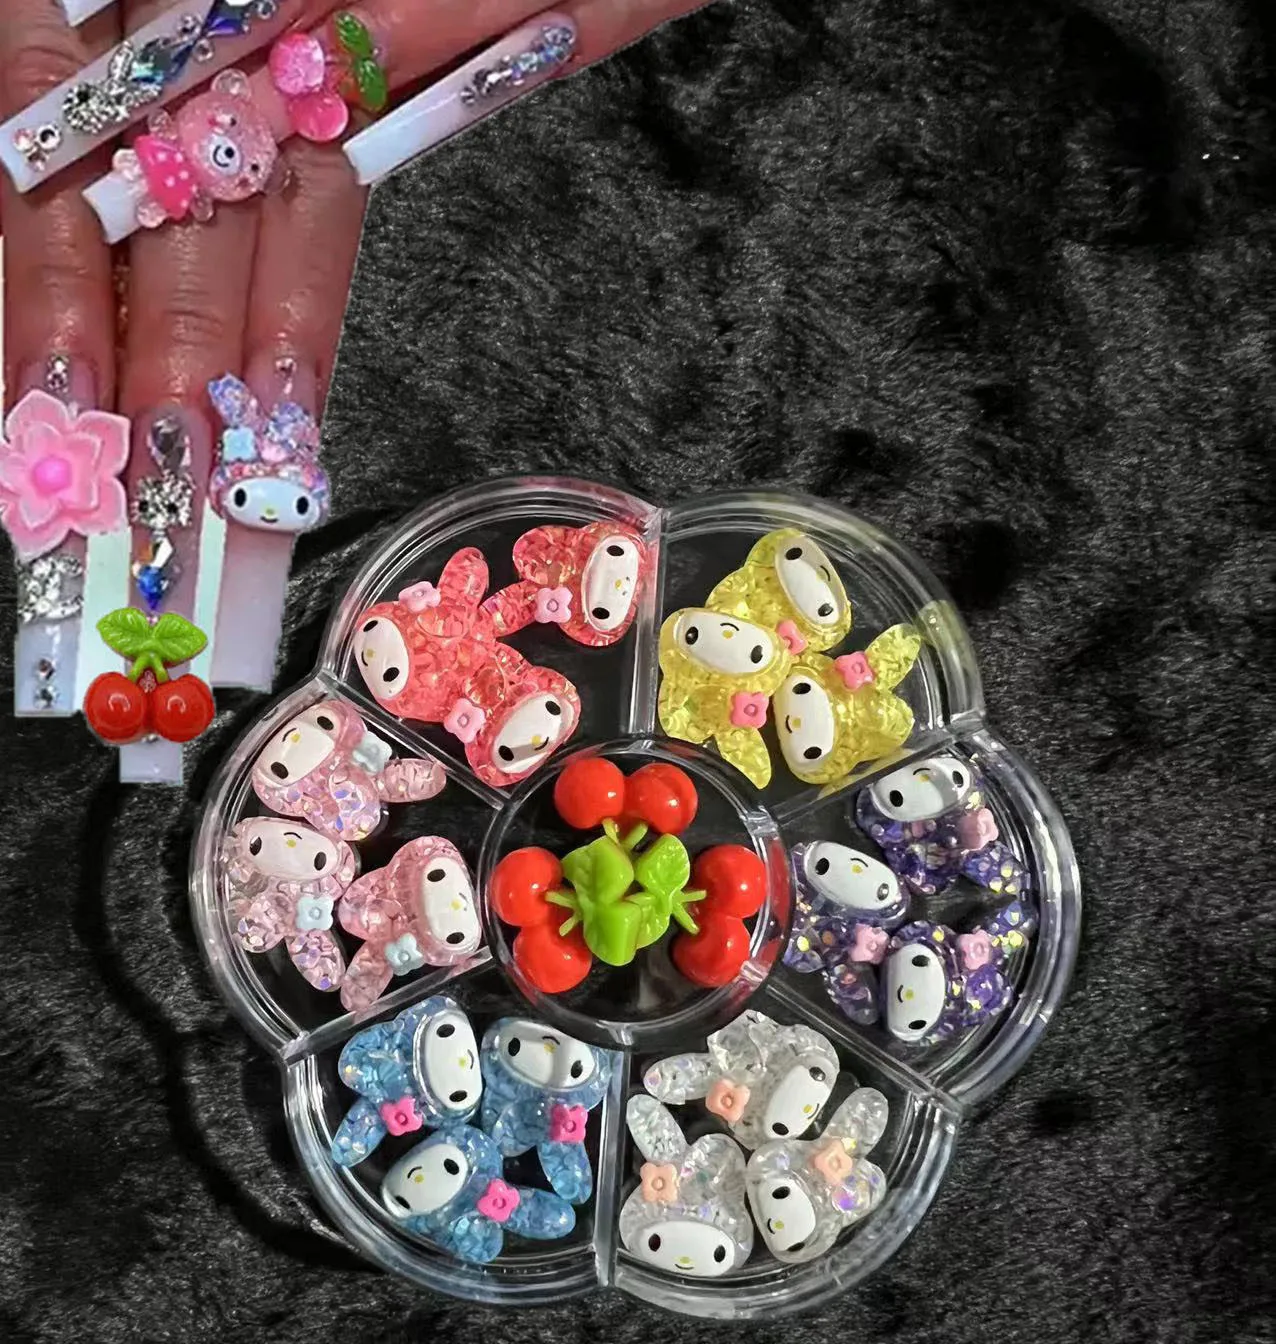 Mini Mix Sanrio Nail Charms-30pcs